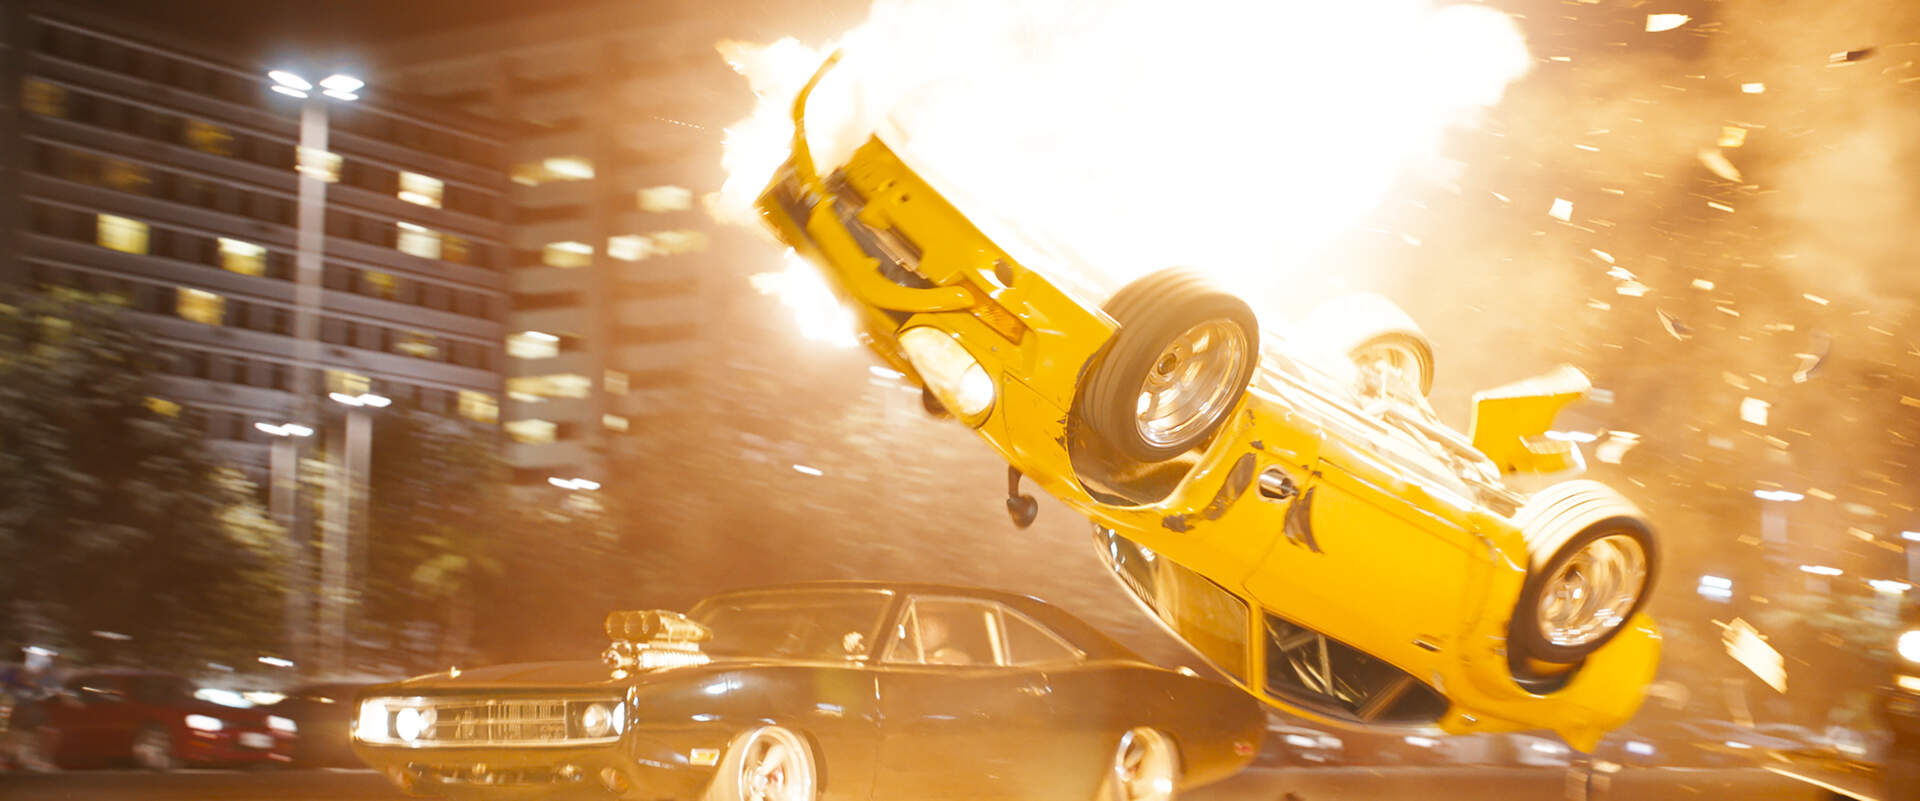 Fast + Furious 10 - Szenenbild 19 von 26